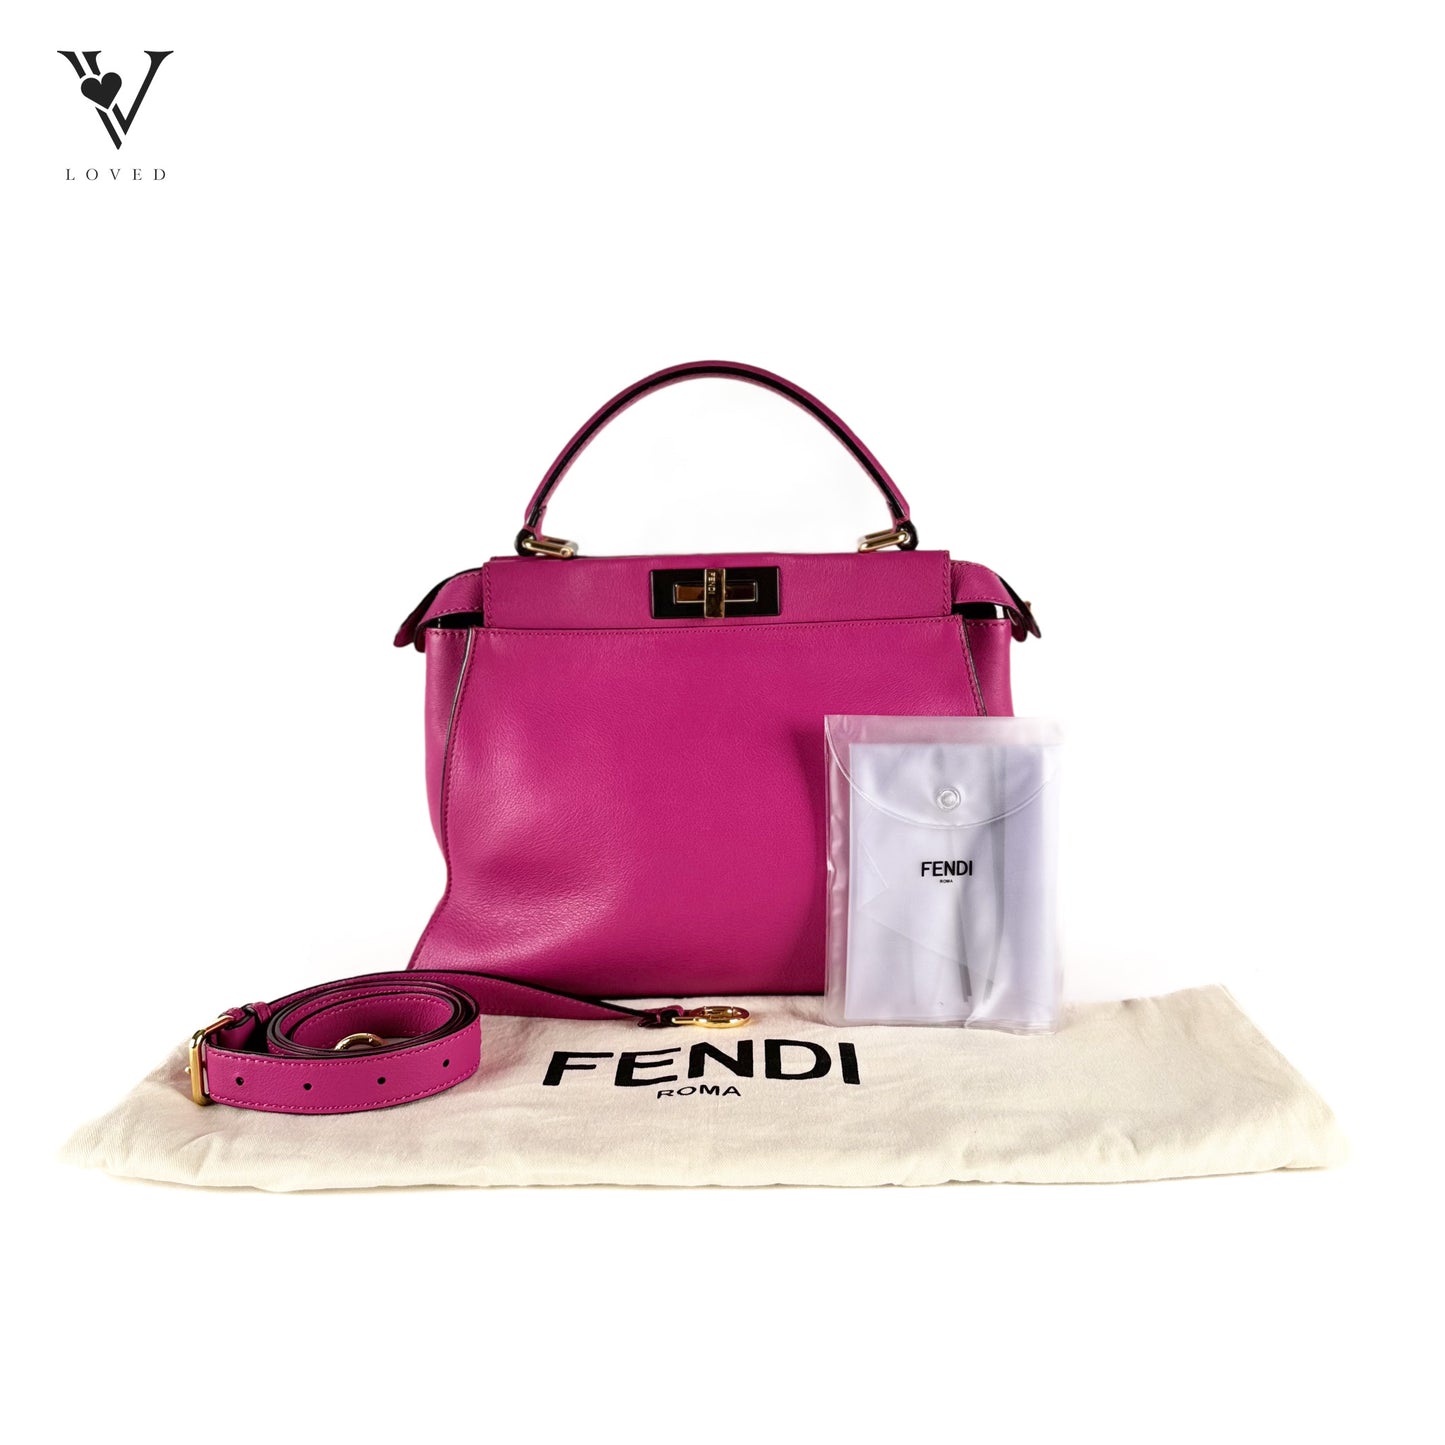 Peekaboo Satchel Handbag in Pink Calfskin Leather